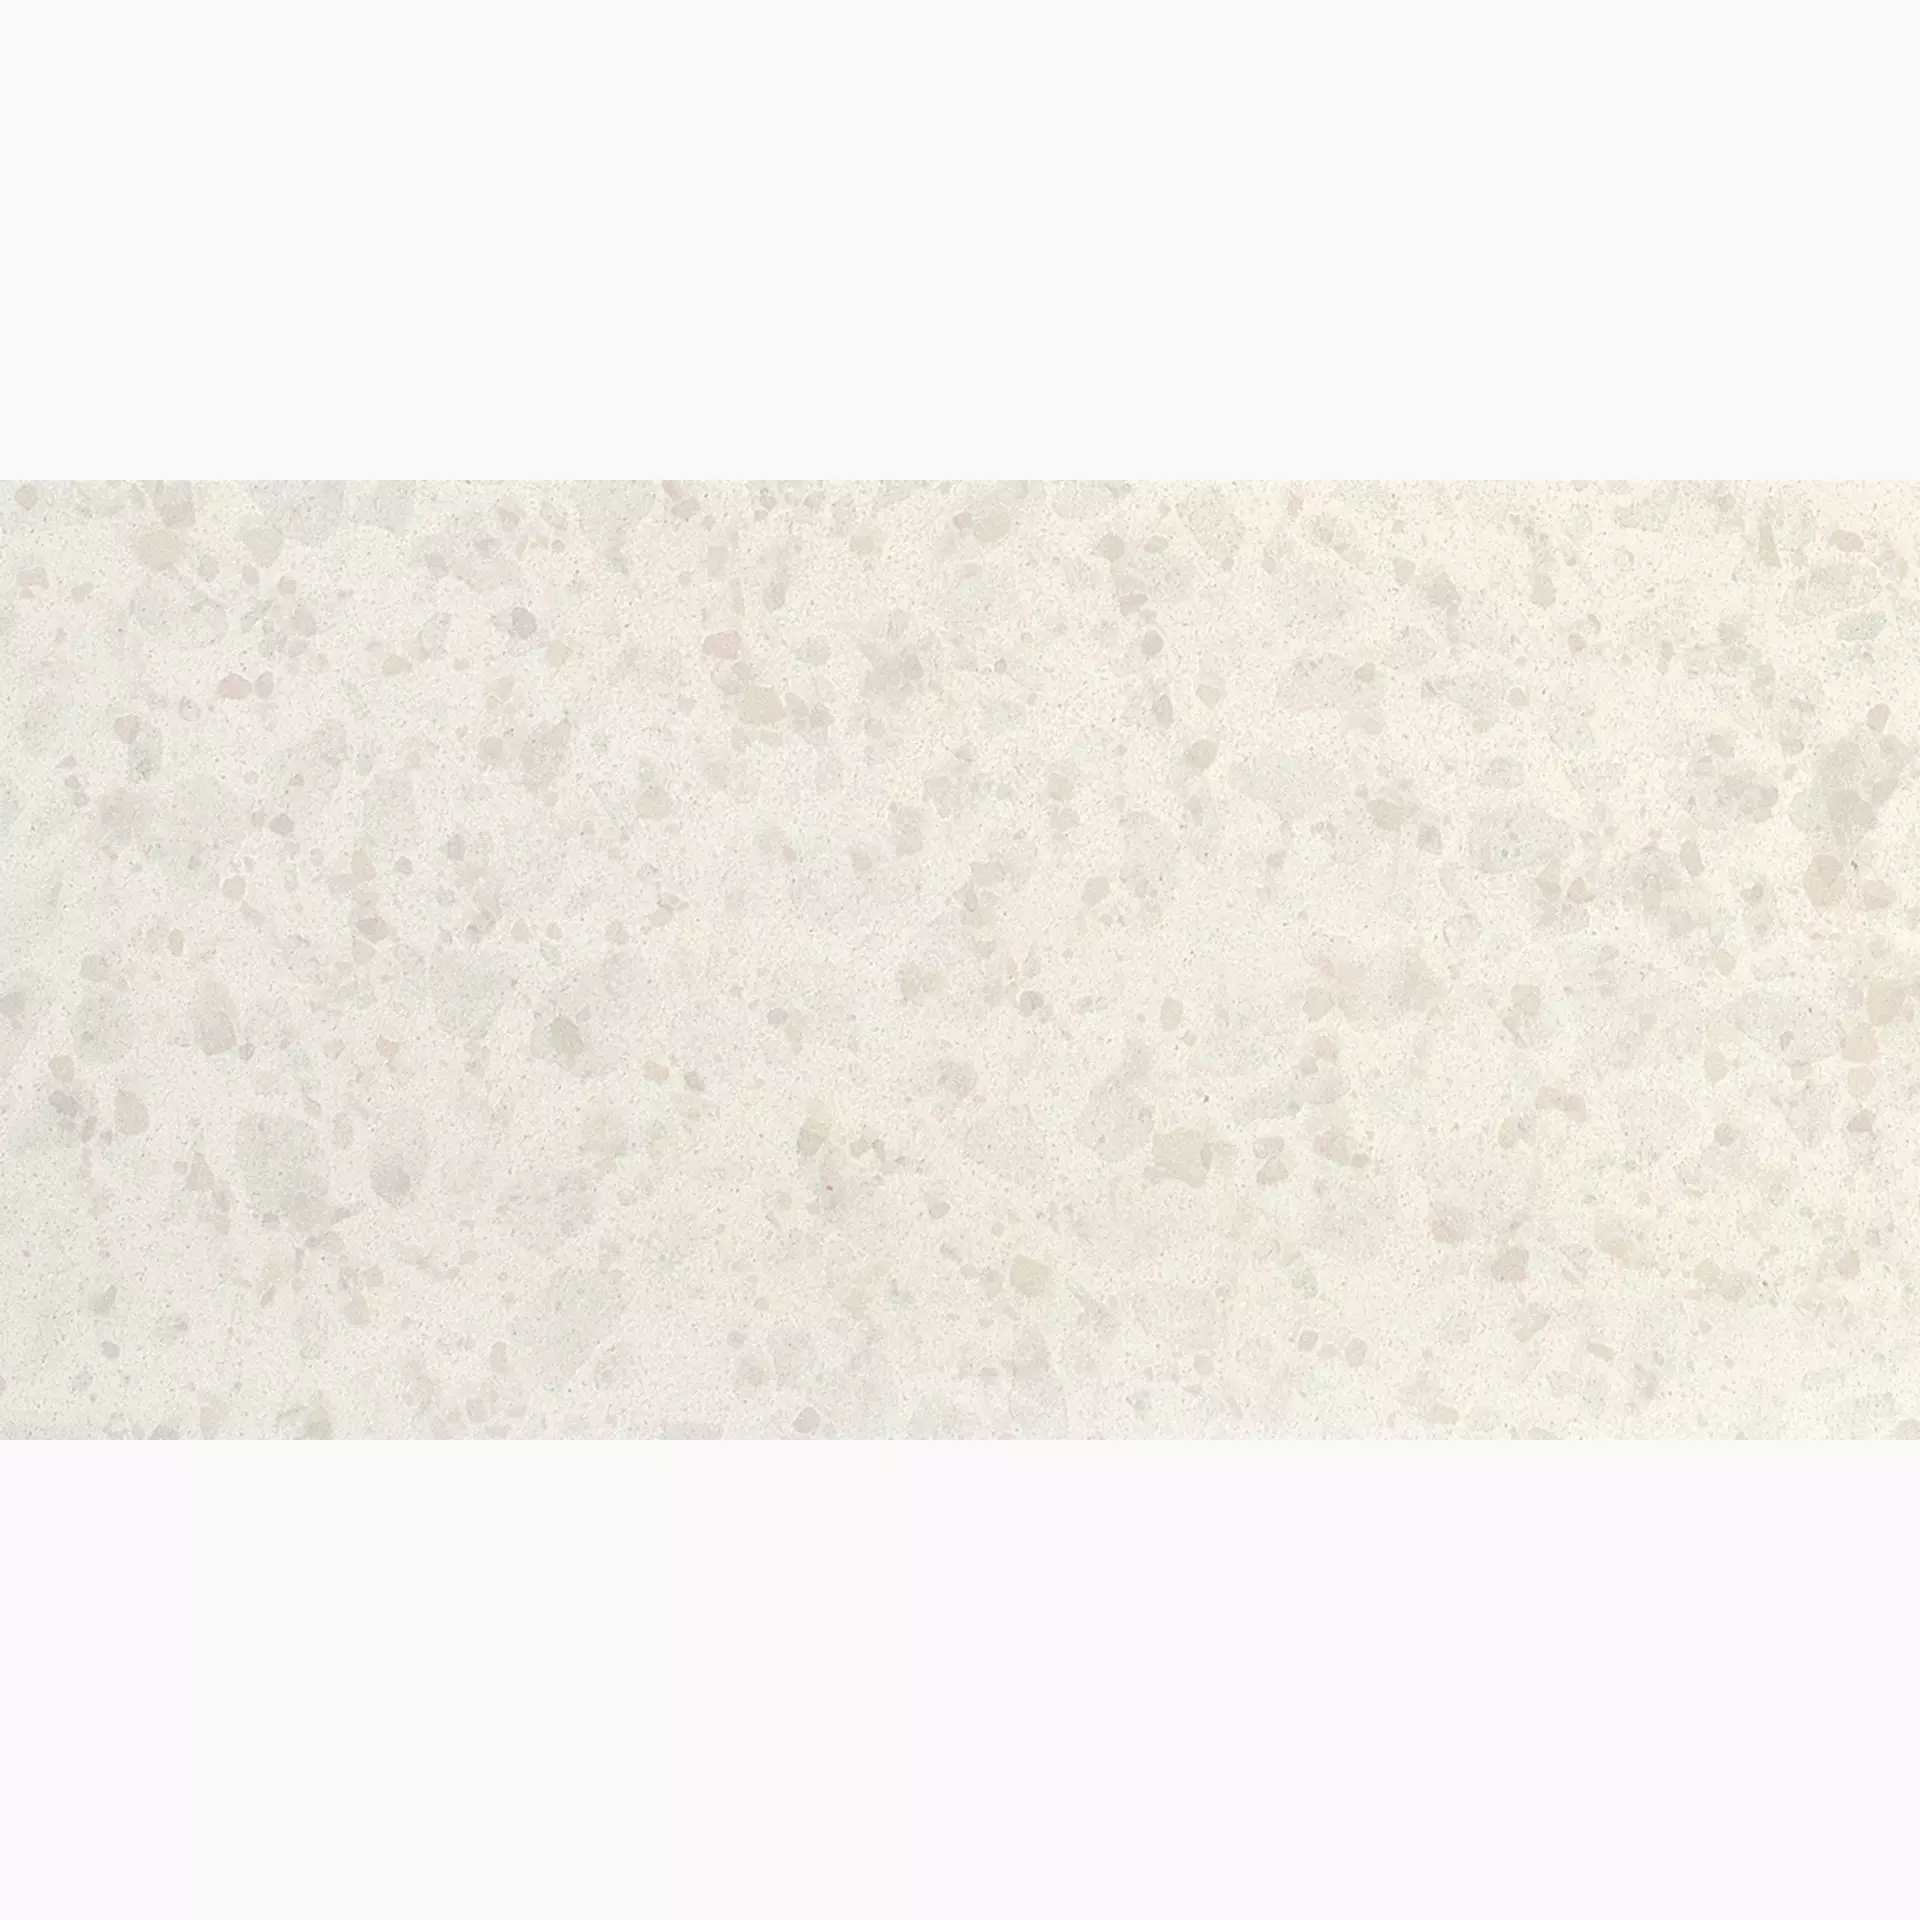 Gigacer Inclusioni Soave Bianco Perla Soft 12INCL3060BIAPERSOFT 30x60cm 12mm